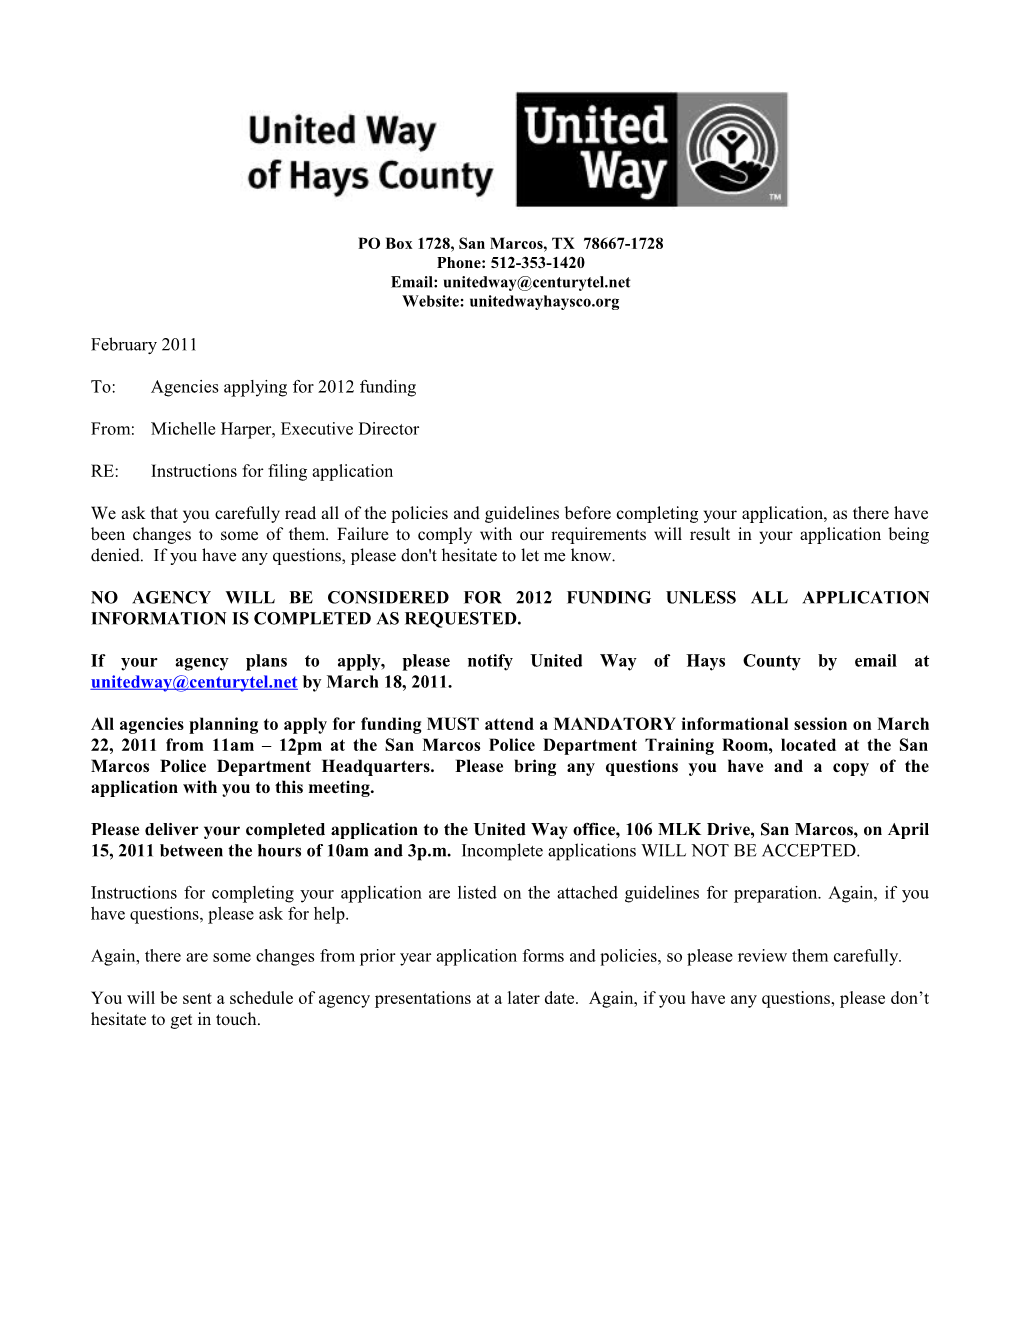 United Way of Hays County